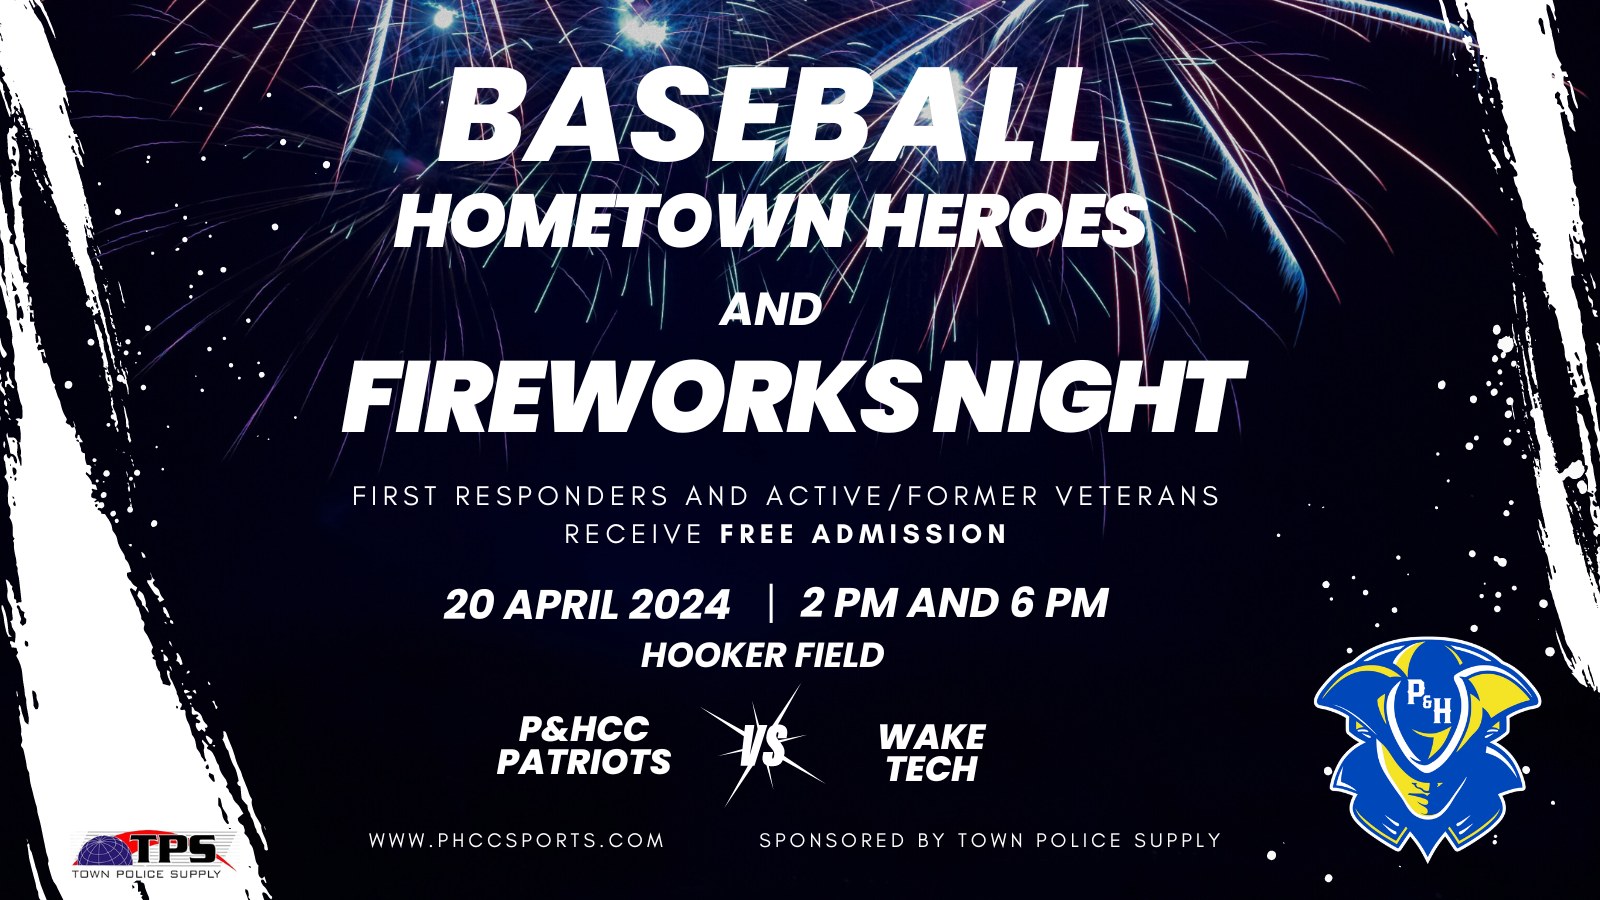 P&HCC Baseball to Host Inaugural Hometown Heroes Night